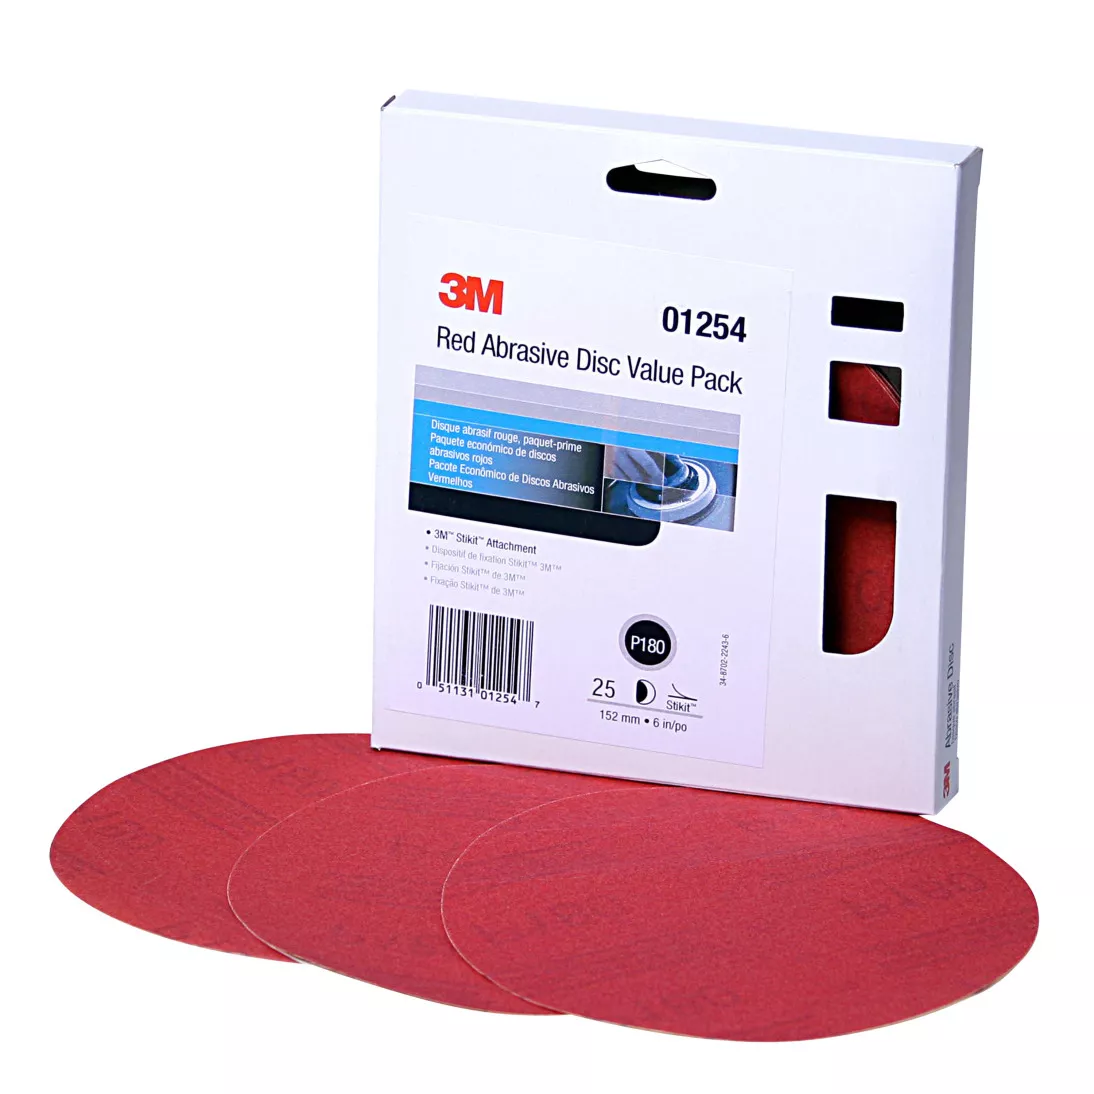 3M™ Red Abrasive Stikit™ Disc Value Pack, 01254, 6 in, P180 grade, 25
discs per carton, 4 cartons per case